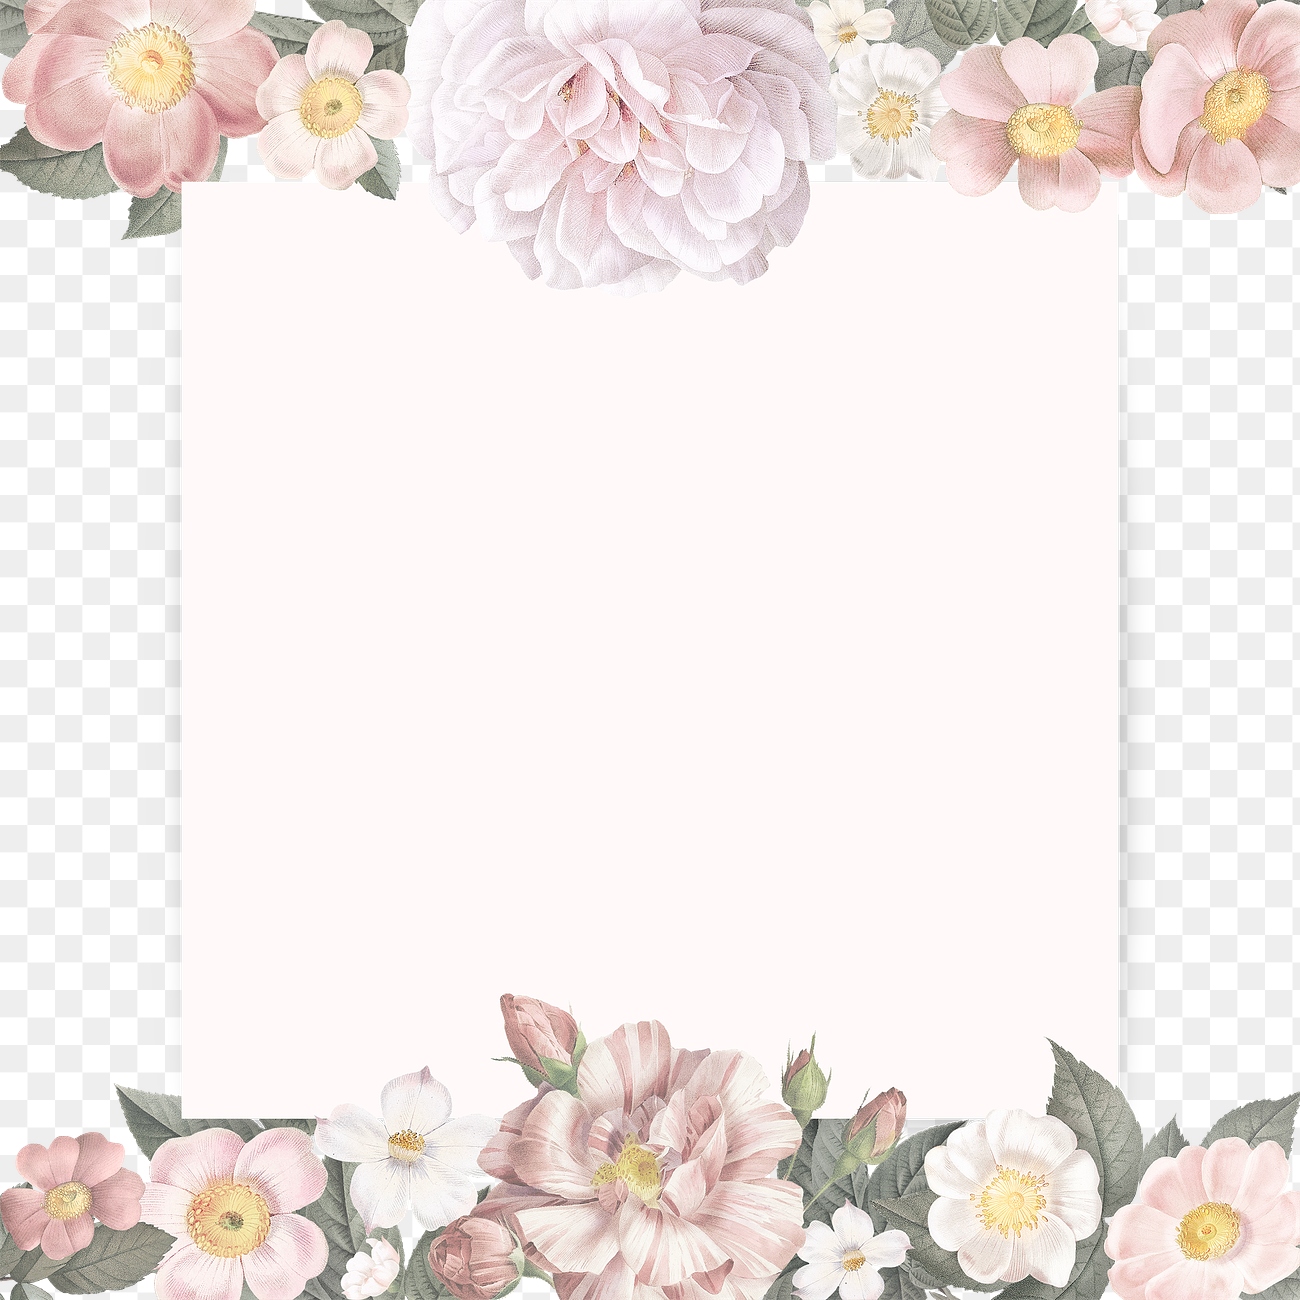 Feminine flowers border | Free stock illustration | High Resolution graphic